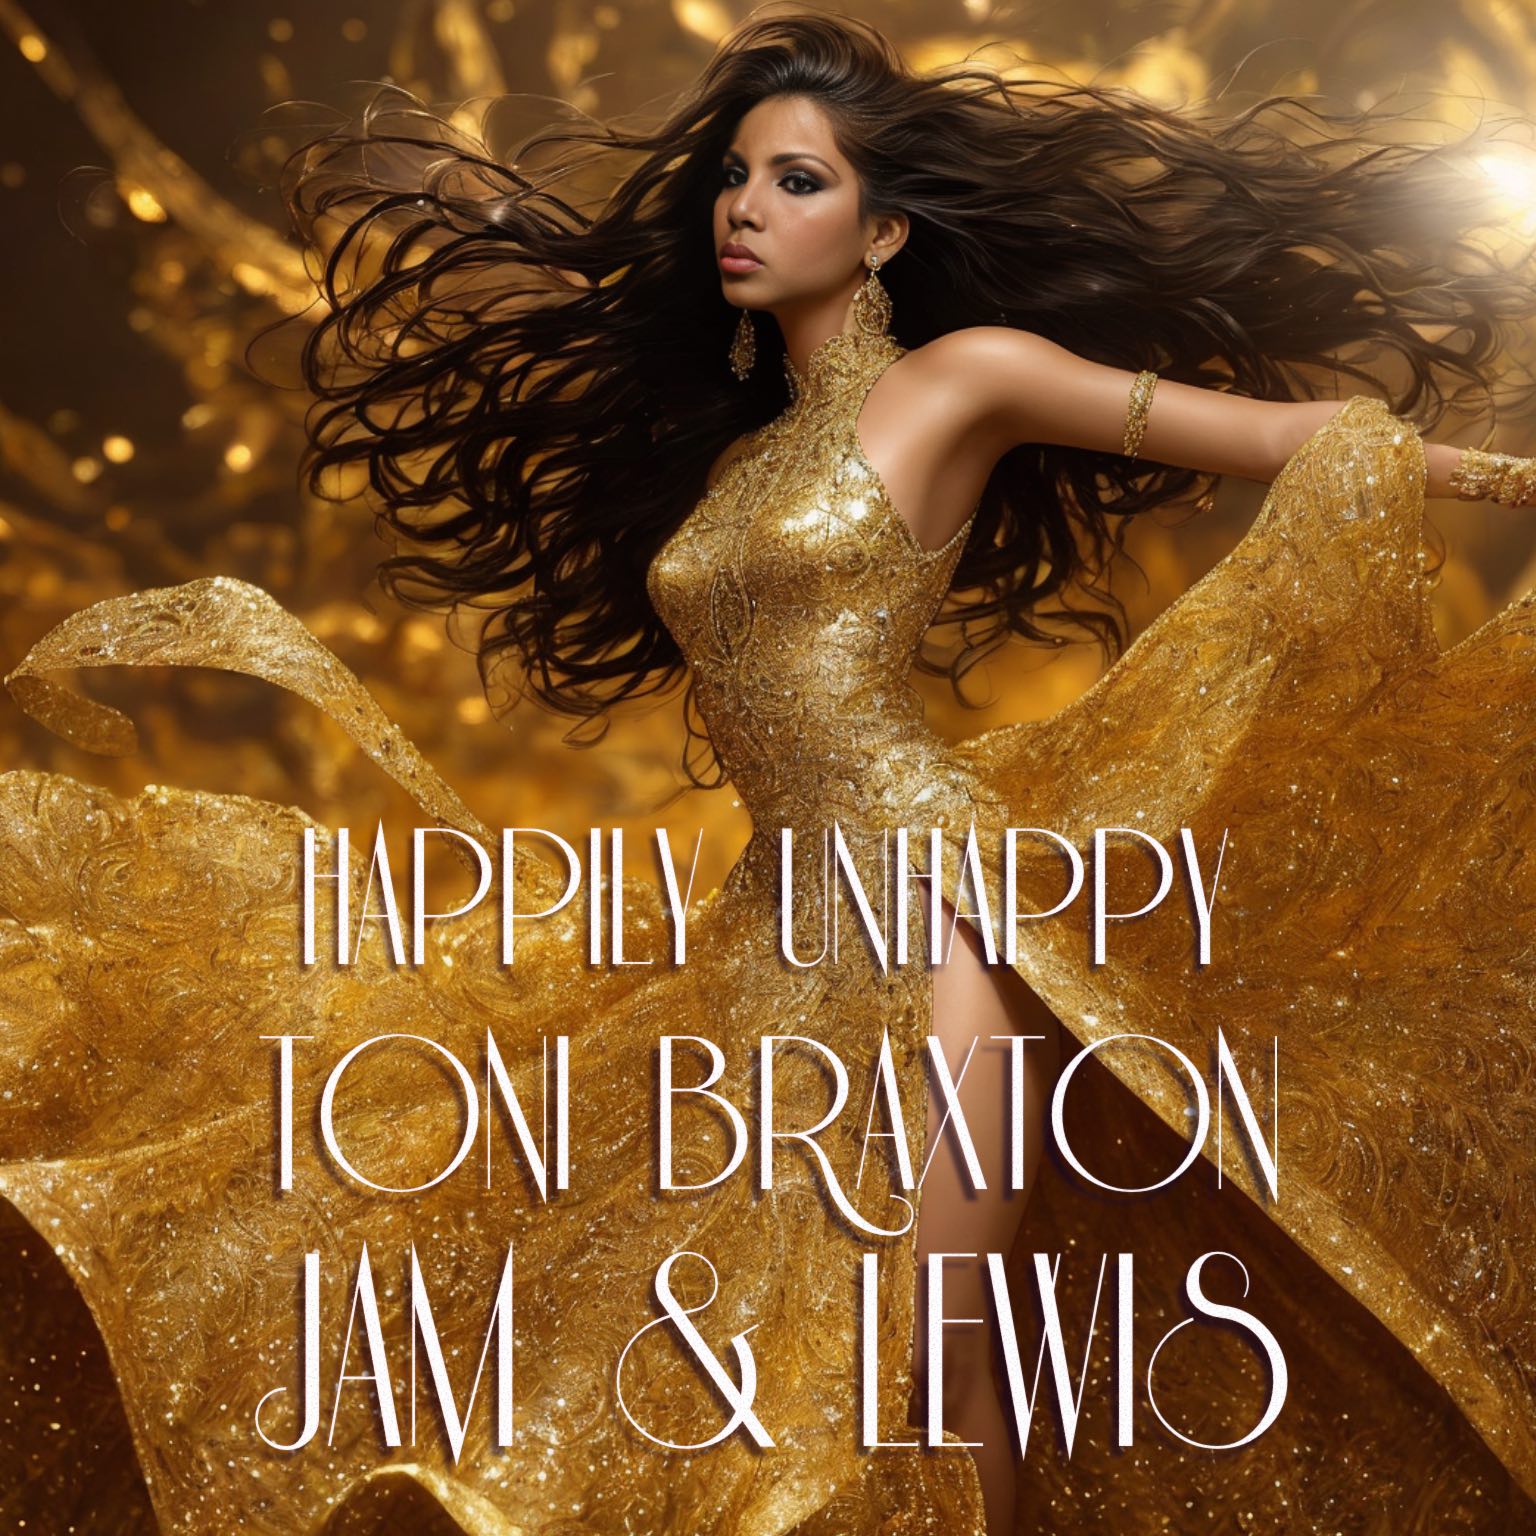  'Happily Unhappy', Toni Braxton, Jam & Lewis